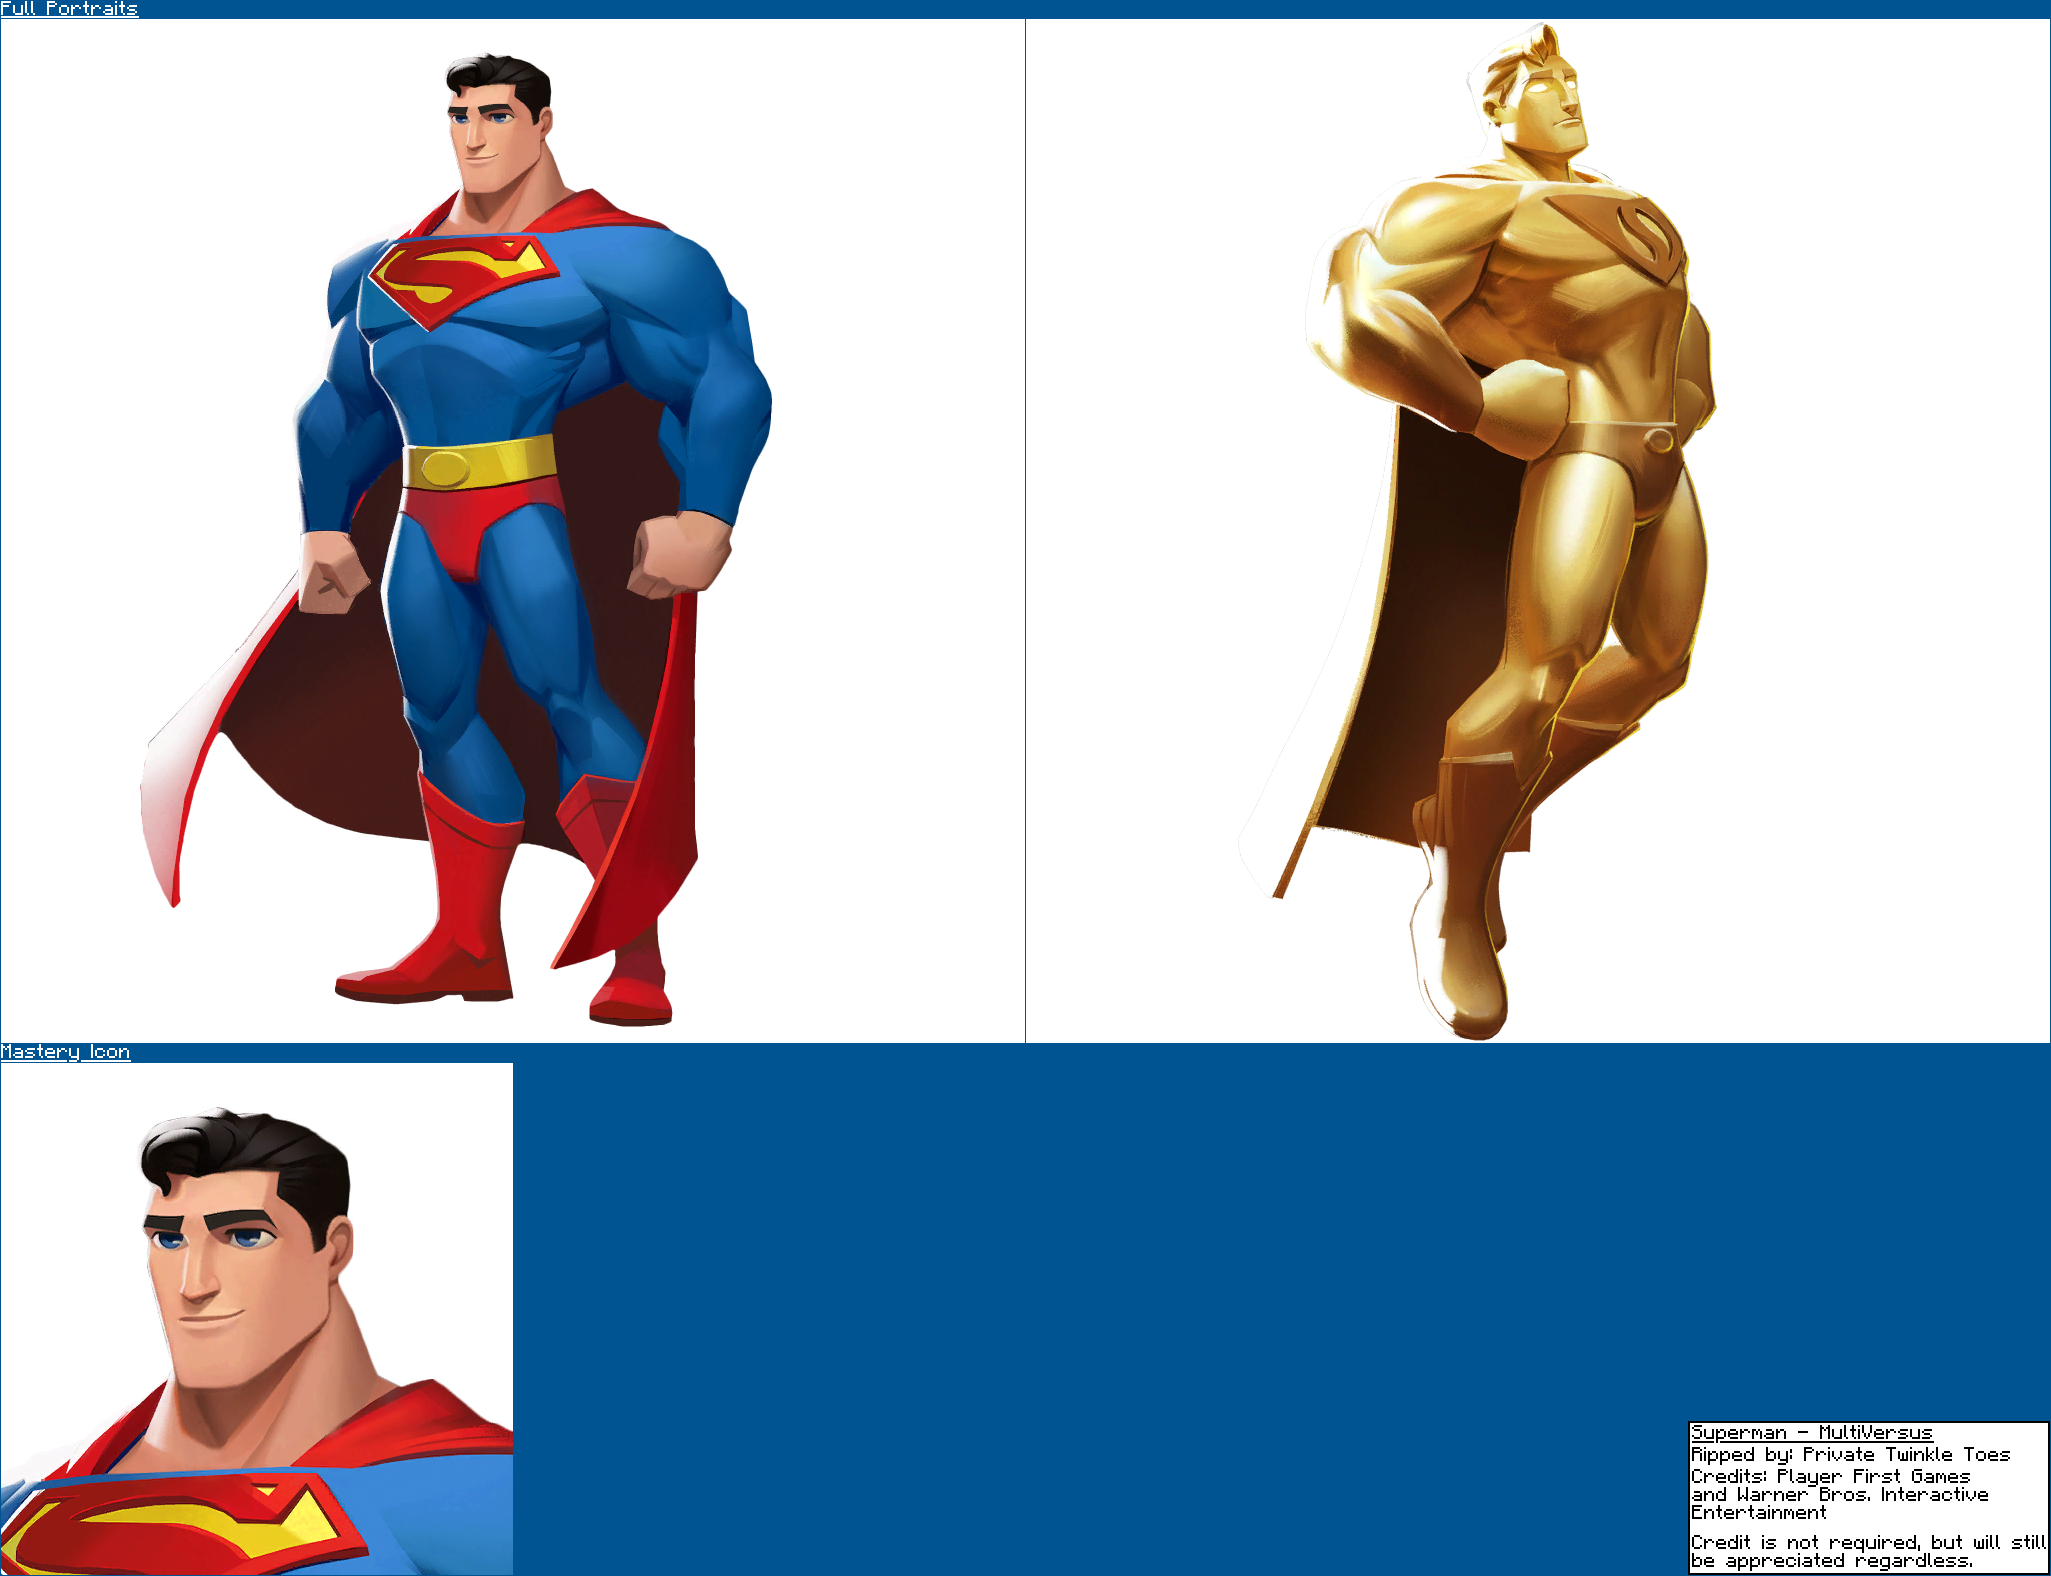 Superman, MultiVersus Wiki